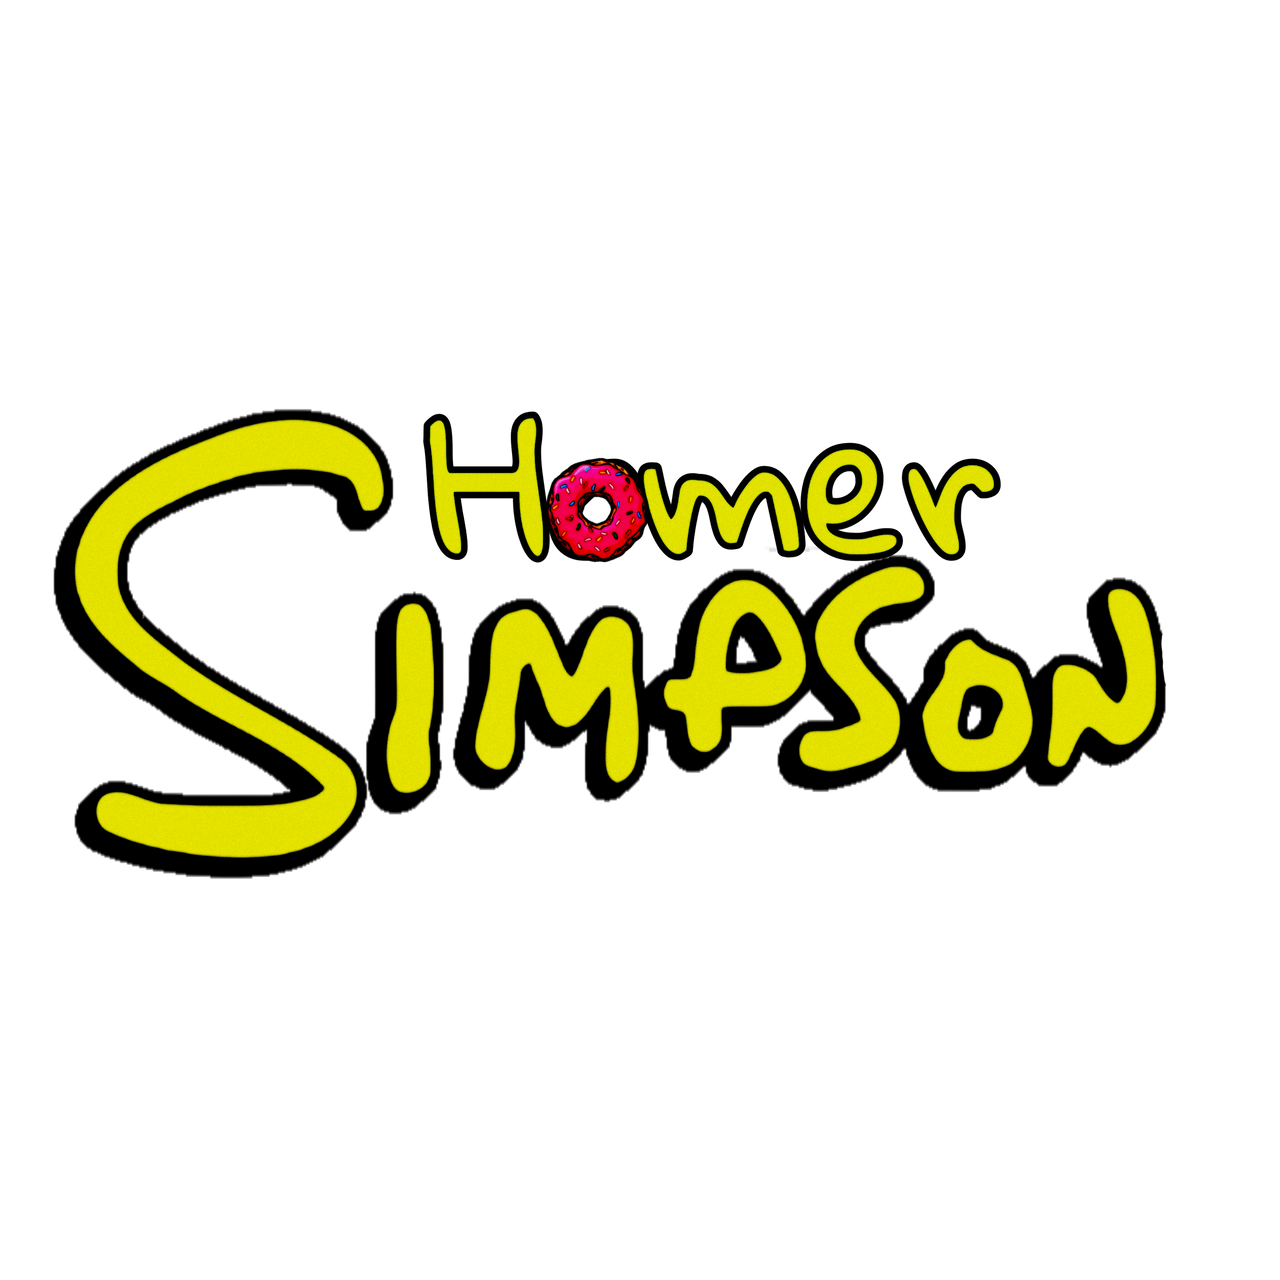 Homer Simpson LOGO PNG 2022 by wcwjunkbox on DeviantArt